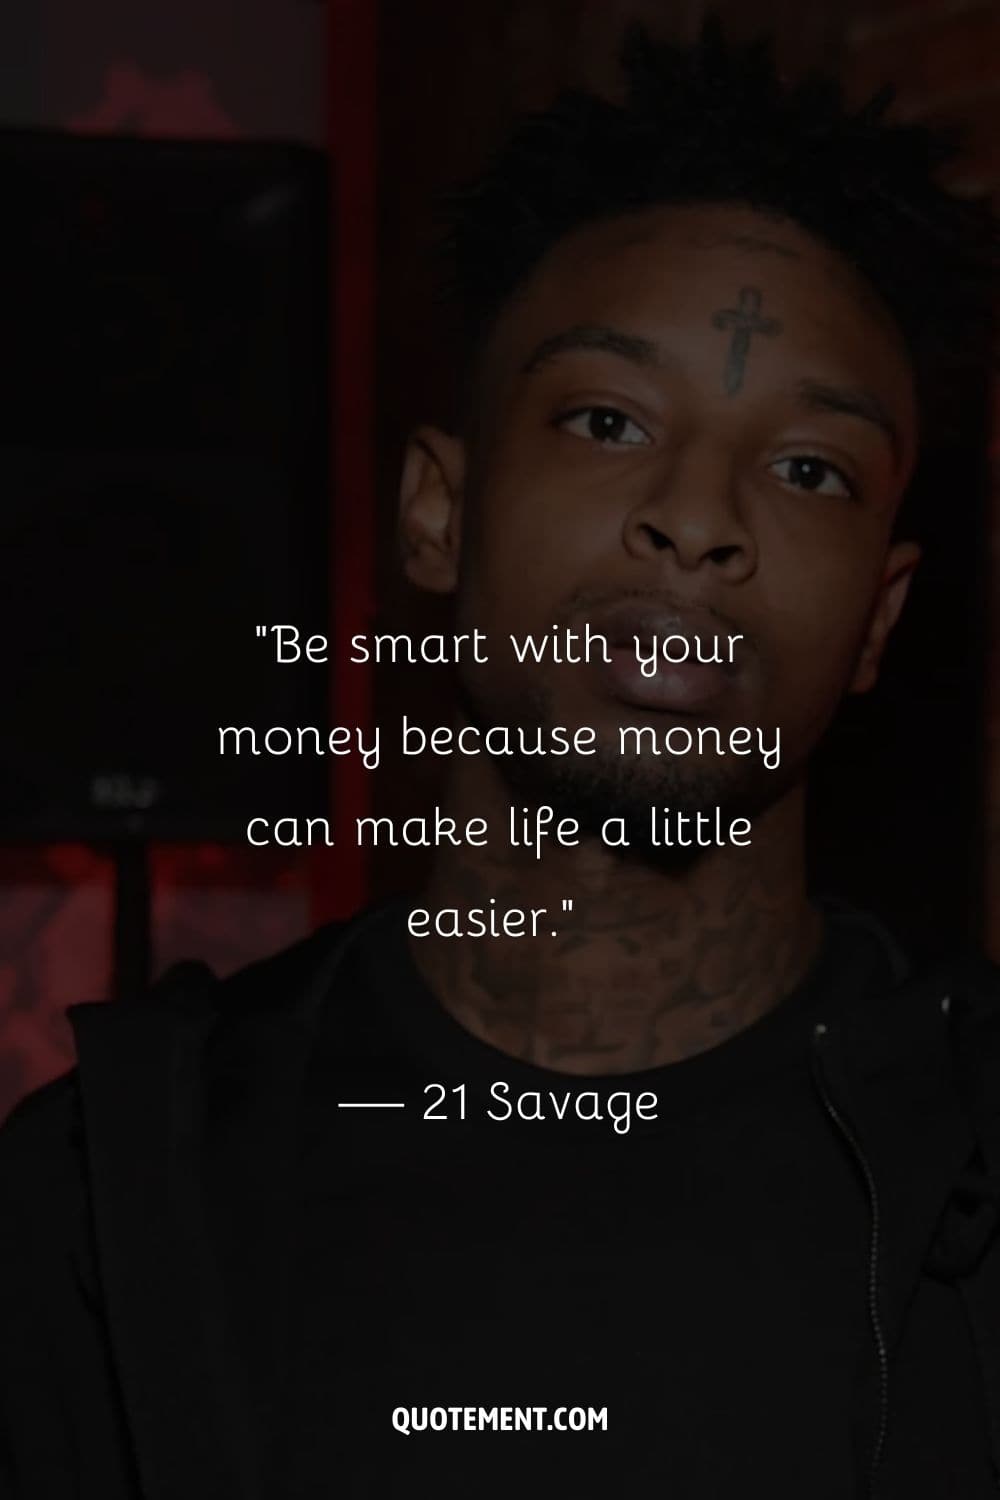 Rapper 21 Savage's distinctive hip-hop presence